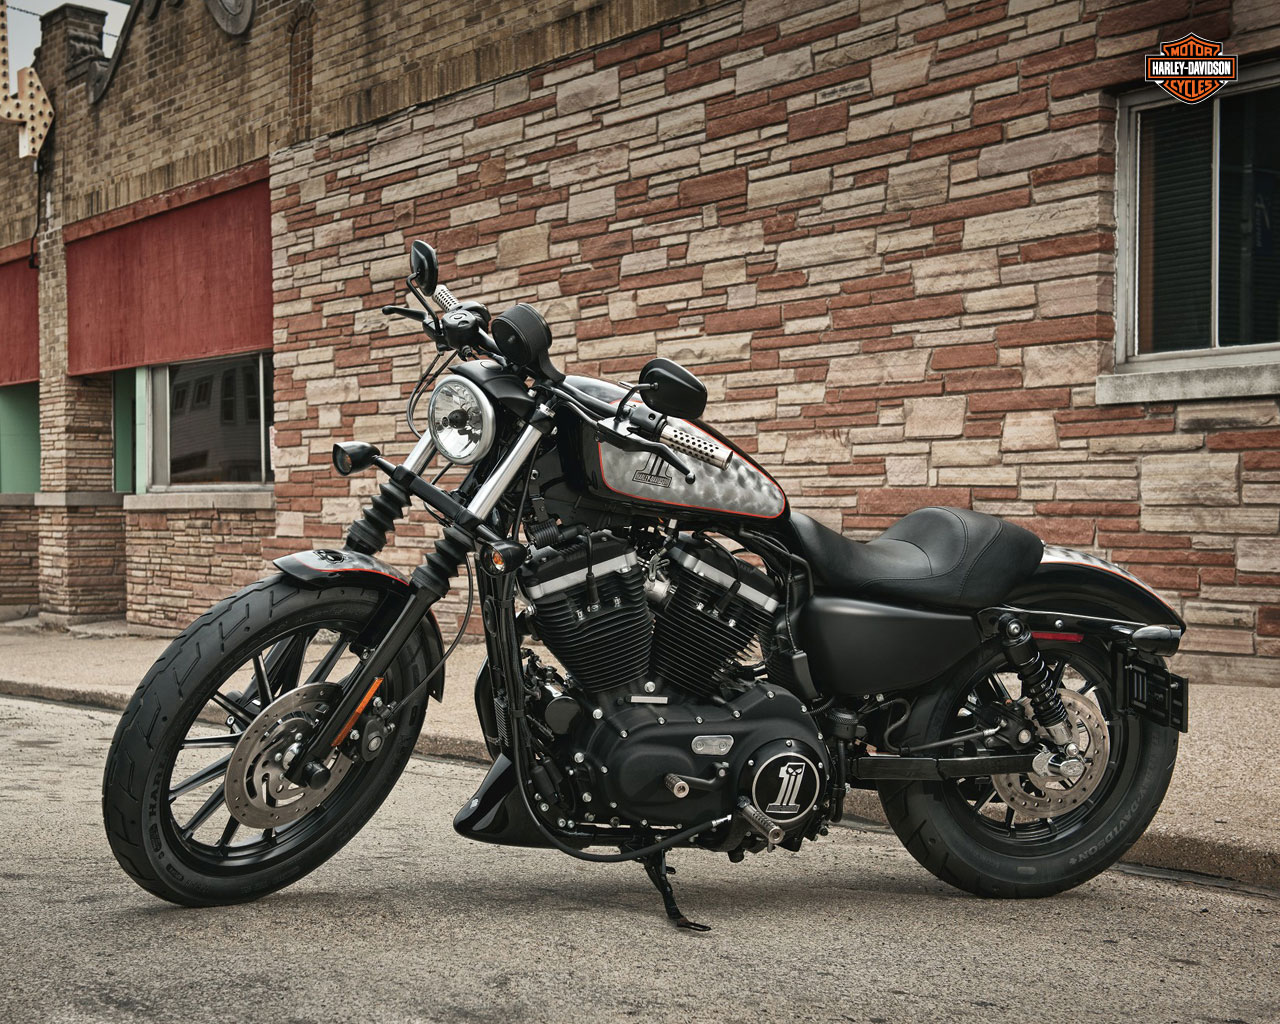 Harley-Davidson XL 883N HD wallpapers, Desktop wallpaper - most viewed